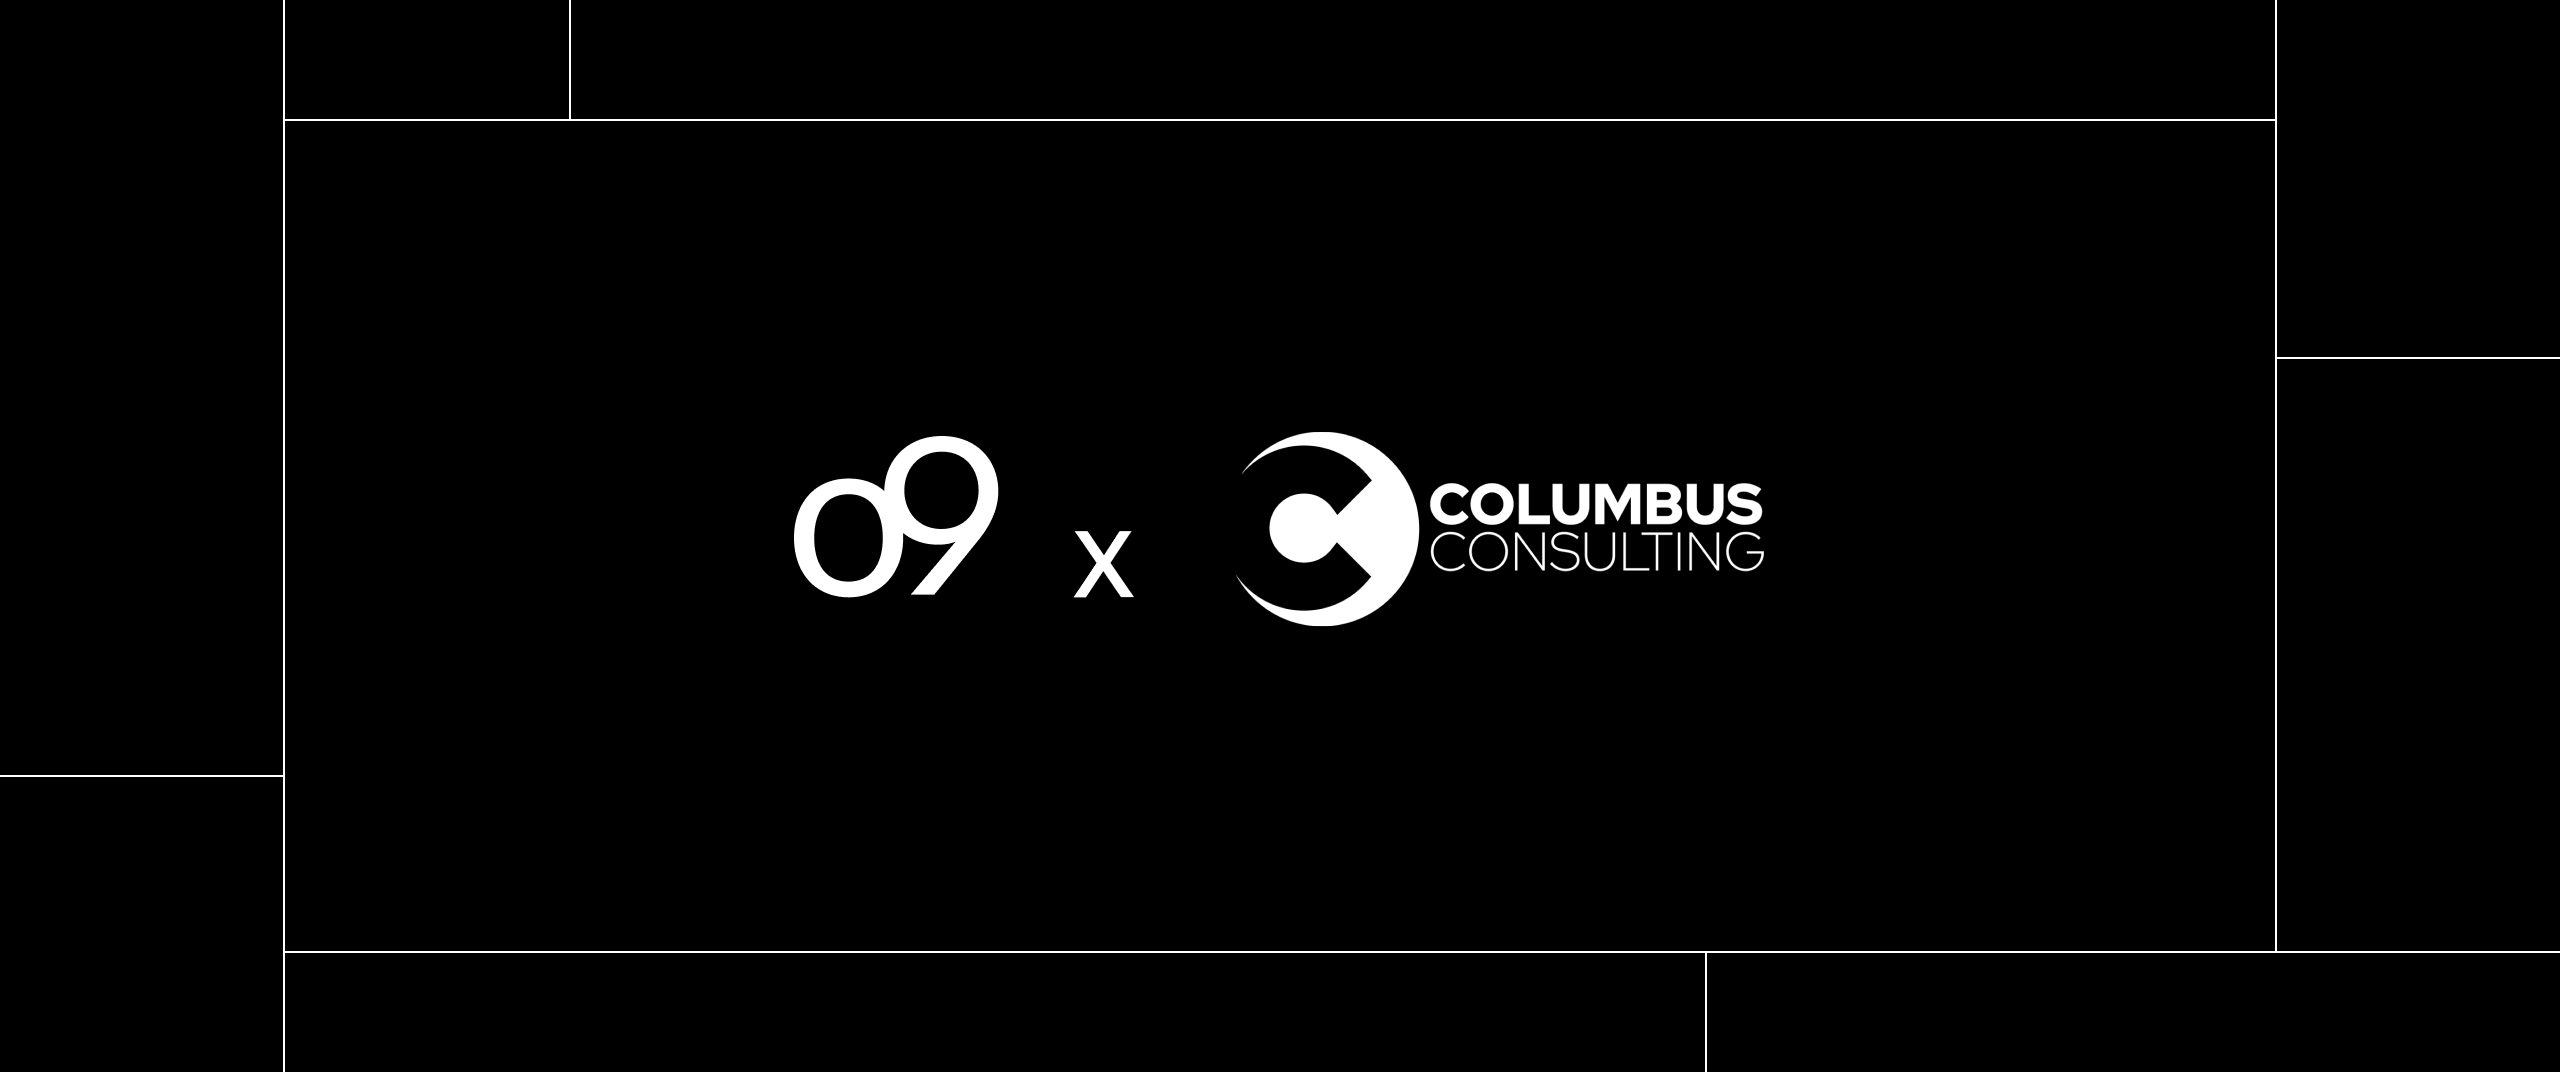 O9 solutions + columbus logos